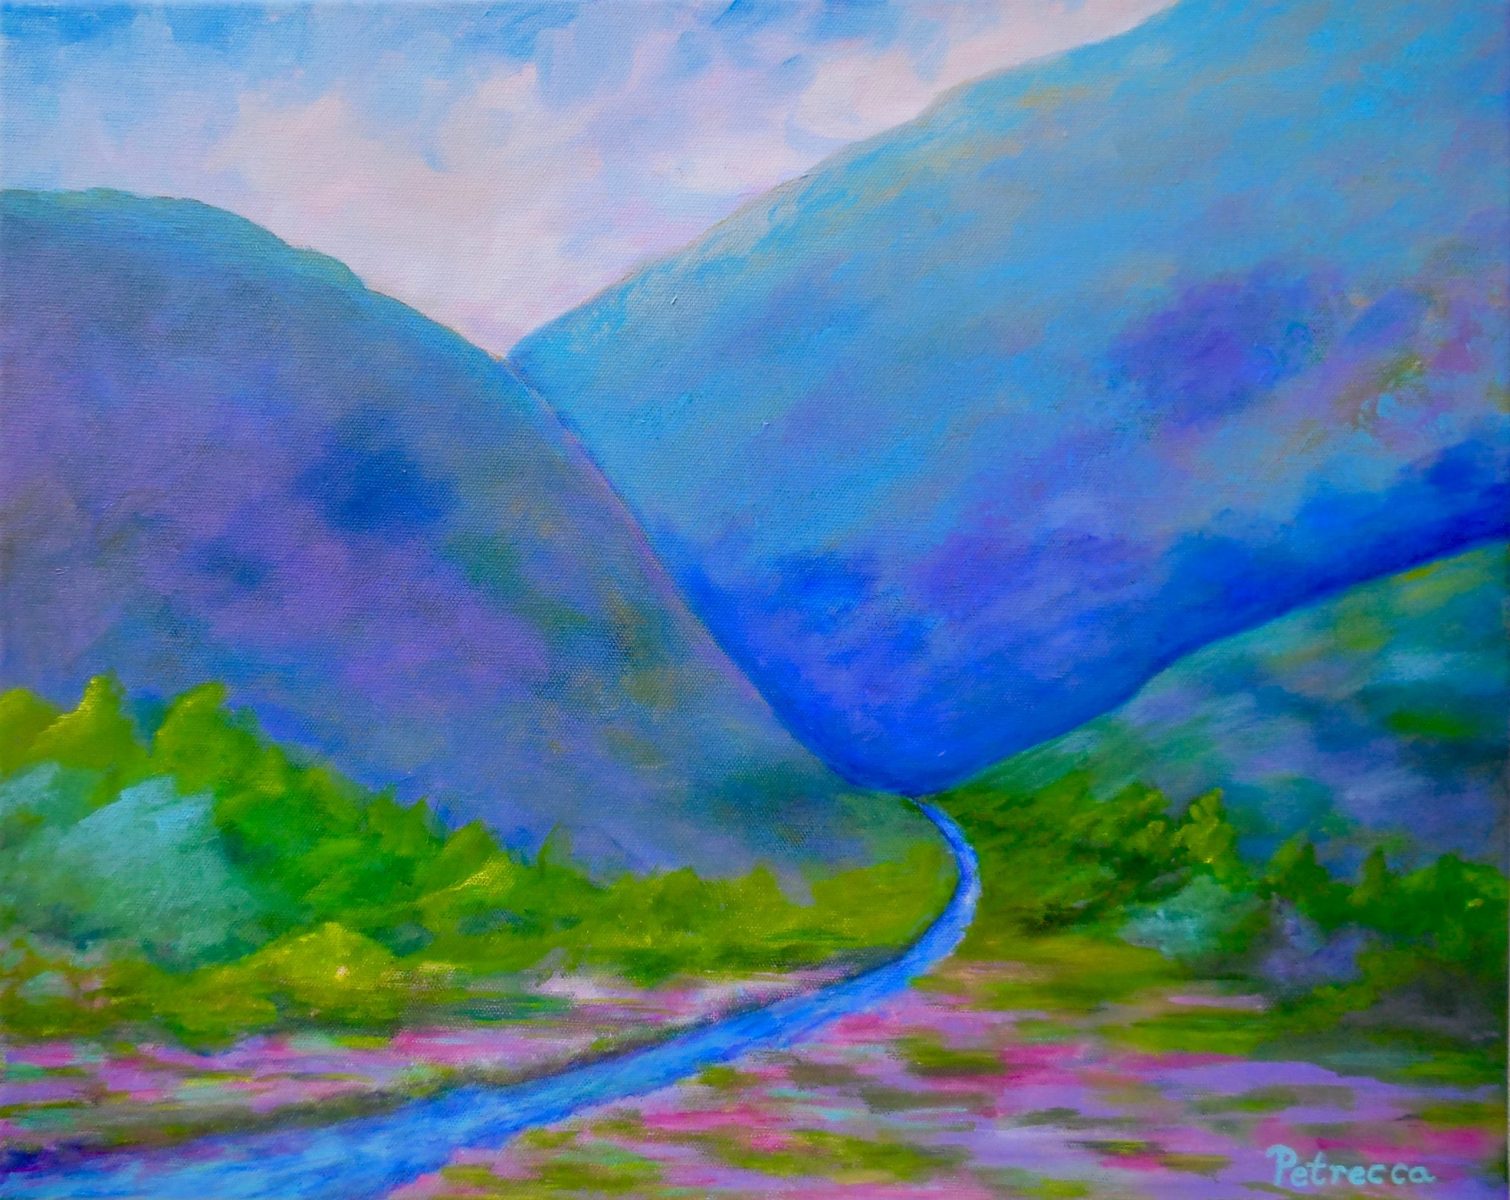 Valley Stream-16x20-acrylic on canvas-Regina Petrecca